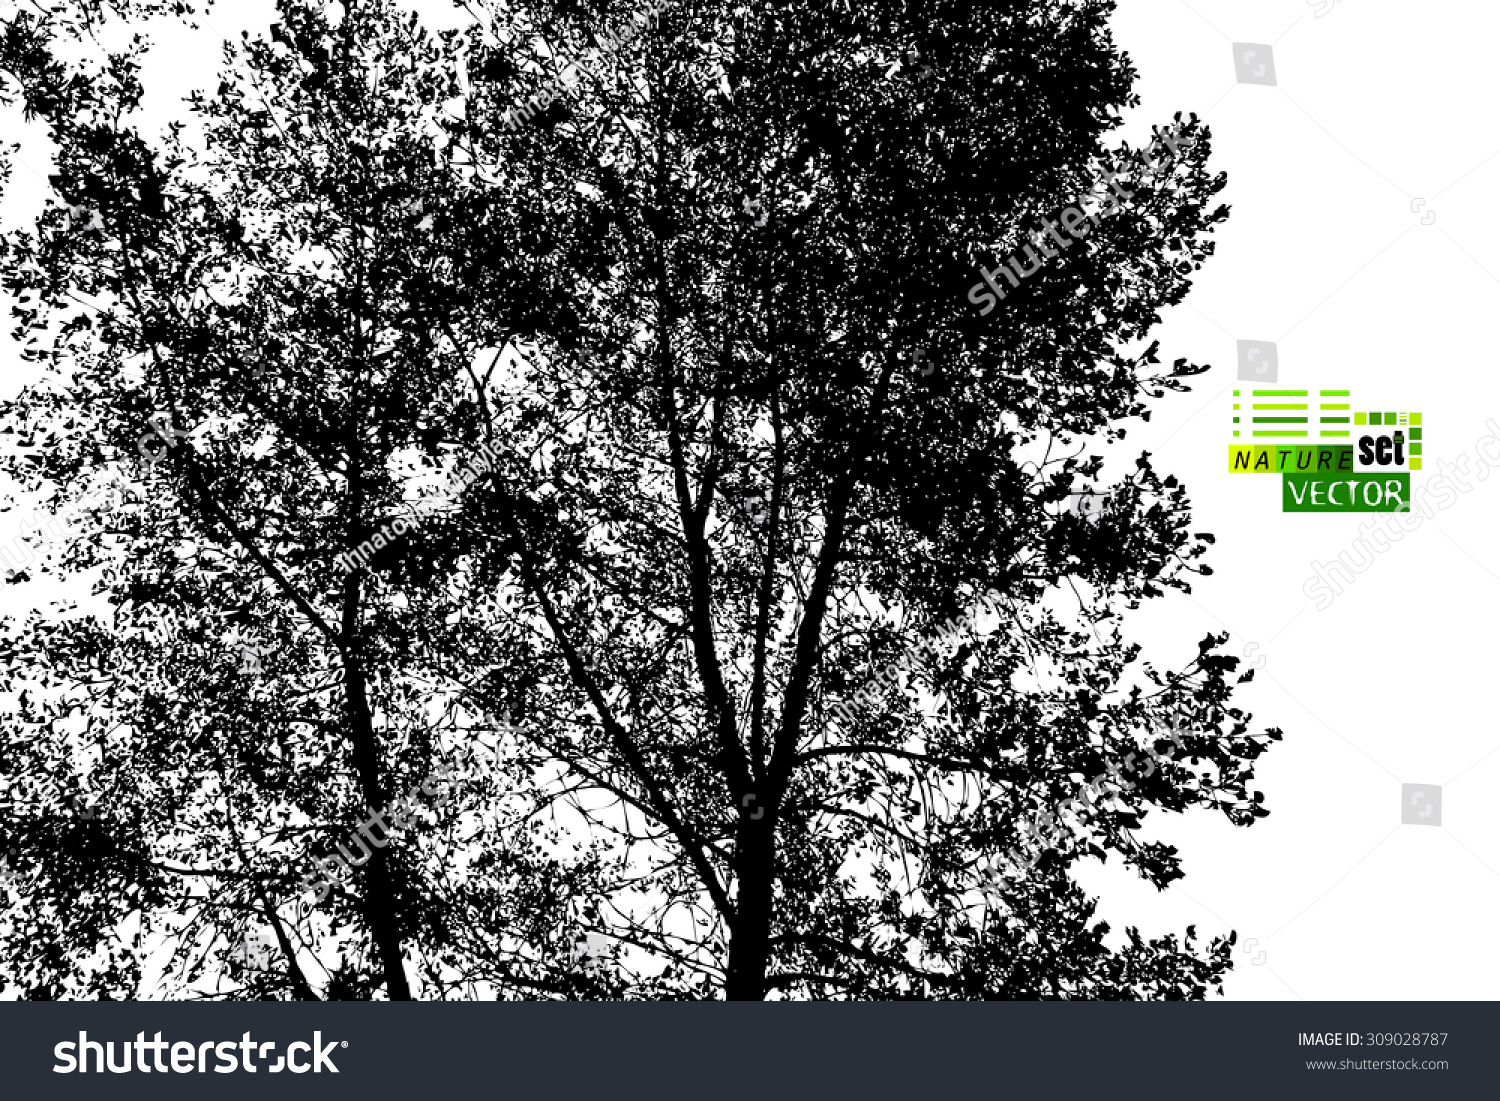 Forest Trees Silhouette Vector Stock Vector 309028787 - Shutterstock